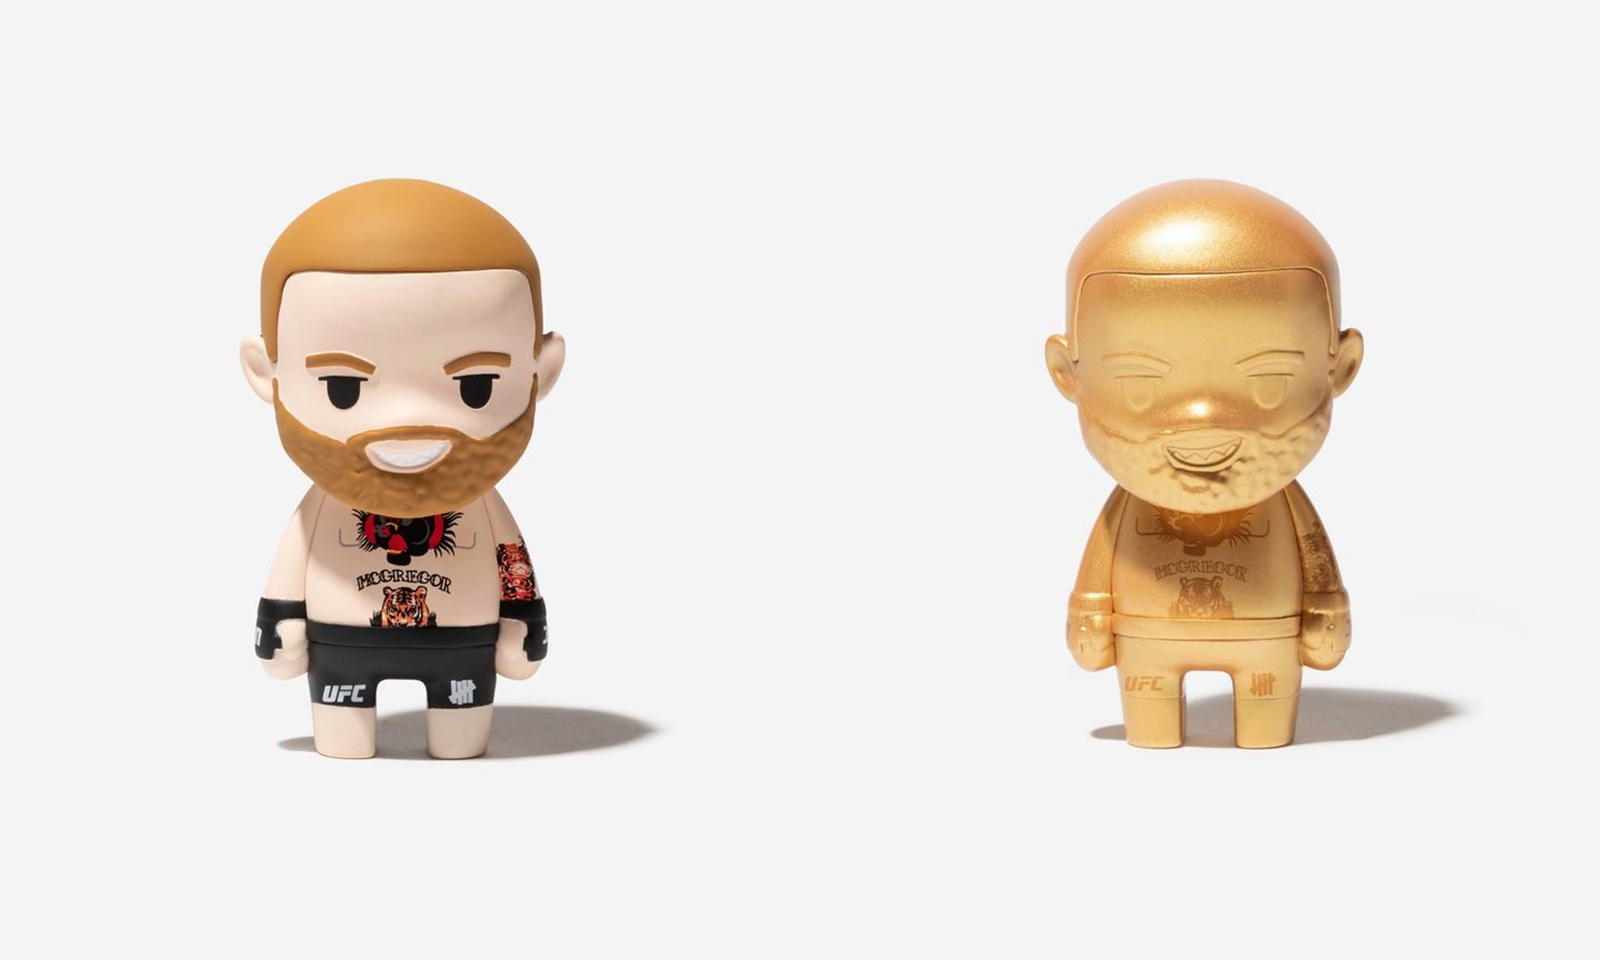 UNDEFEATED x UFC 将推出 Conor McGregor 形象玩偶